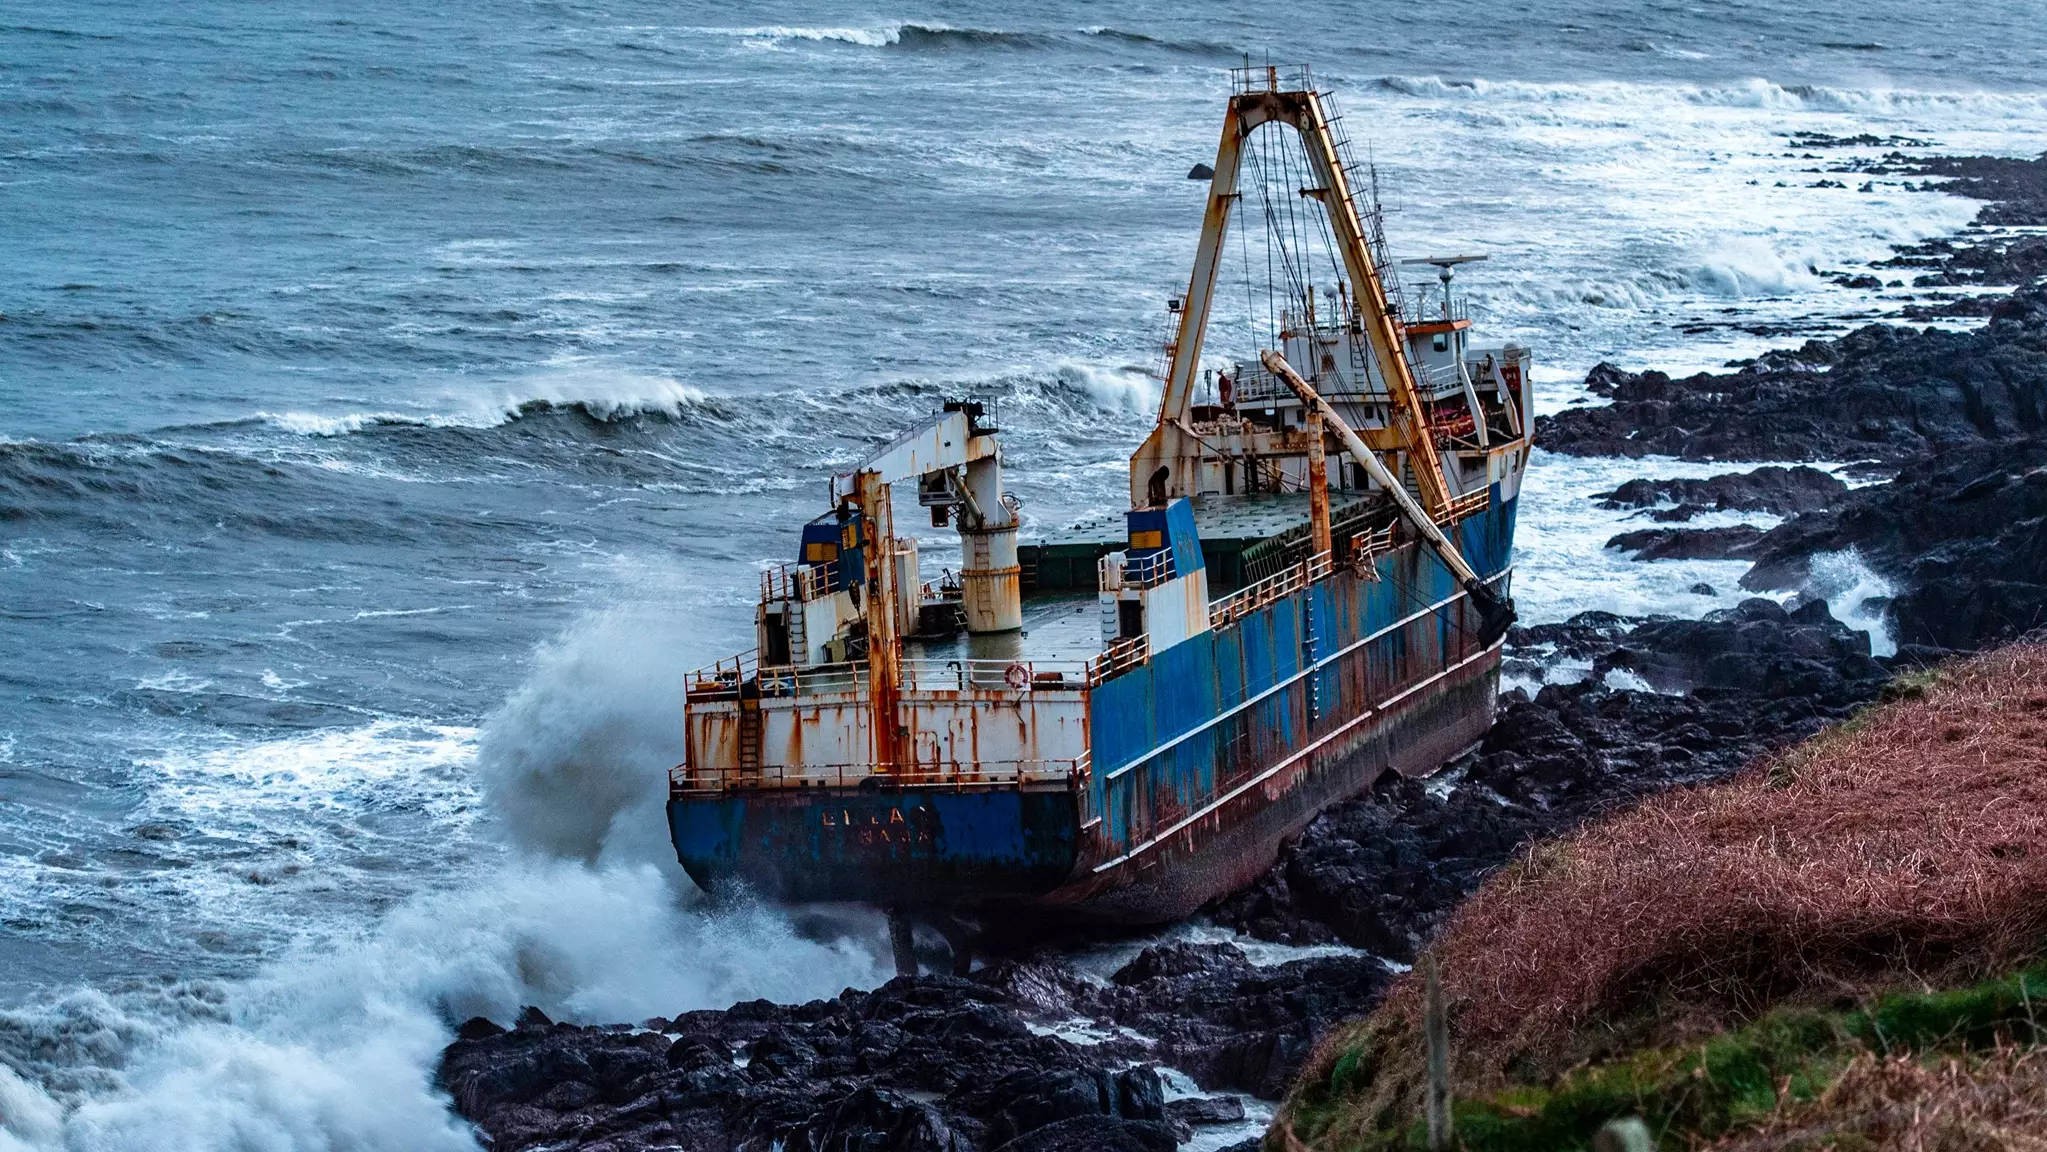 Ship Abandoned Since 2018 Washes Up On Coast Of Ireland During Storm Dennis